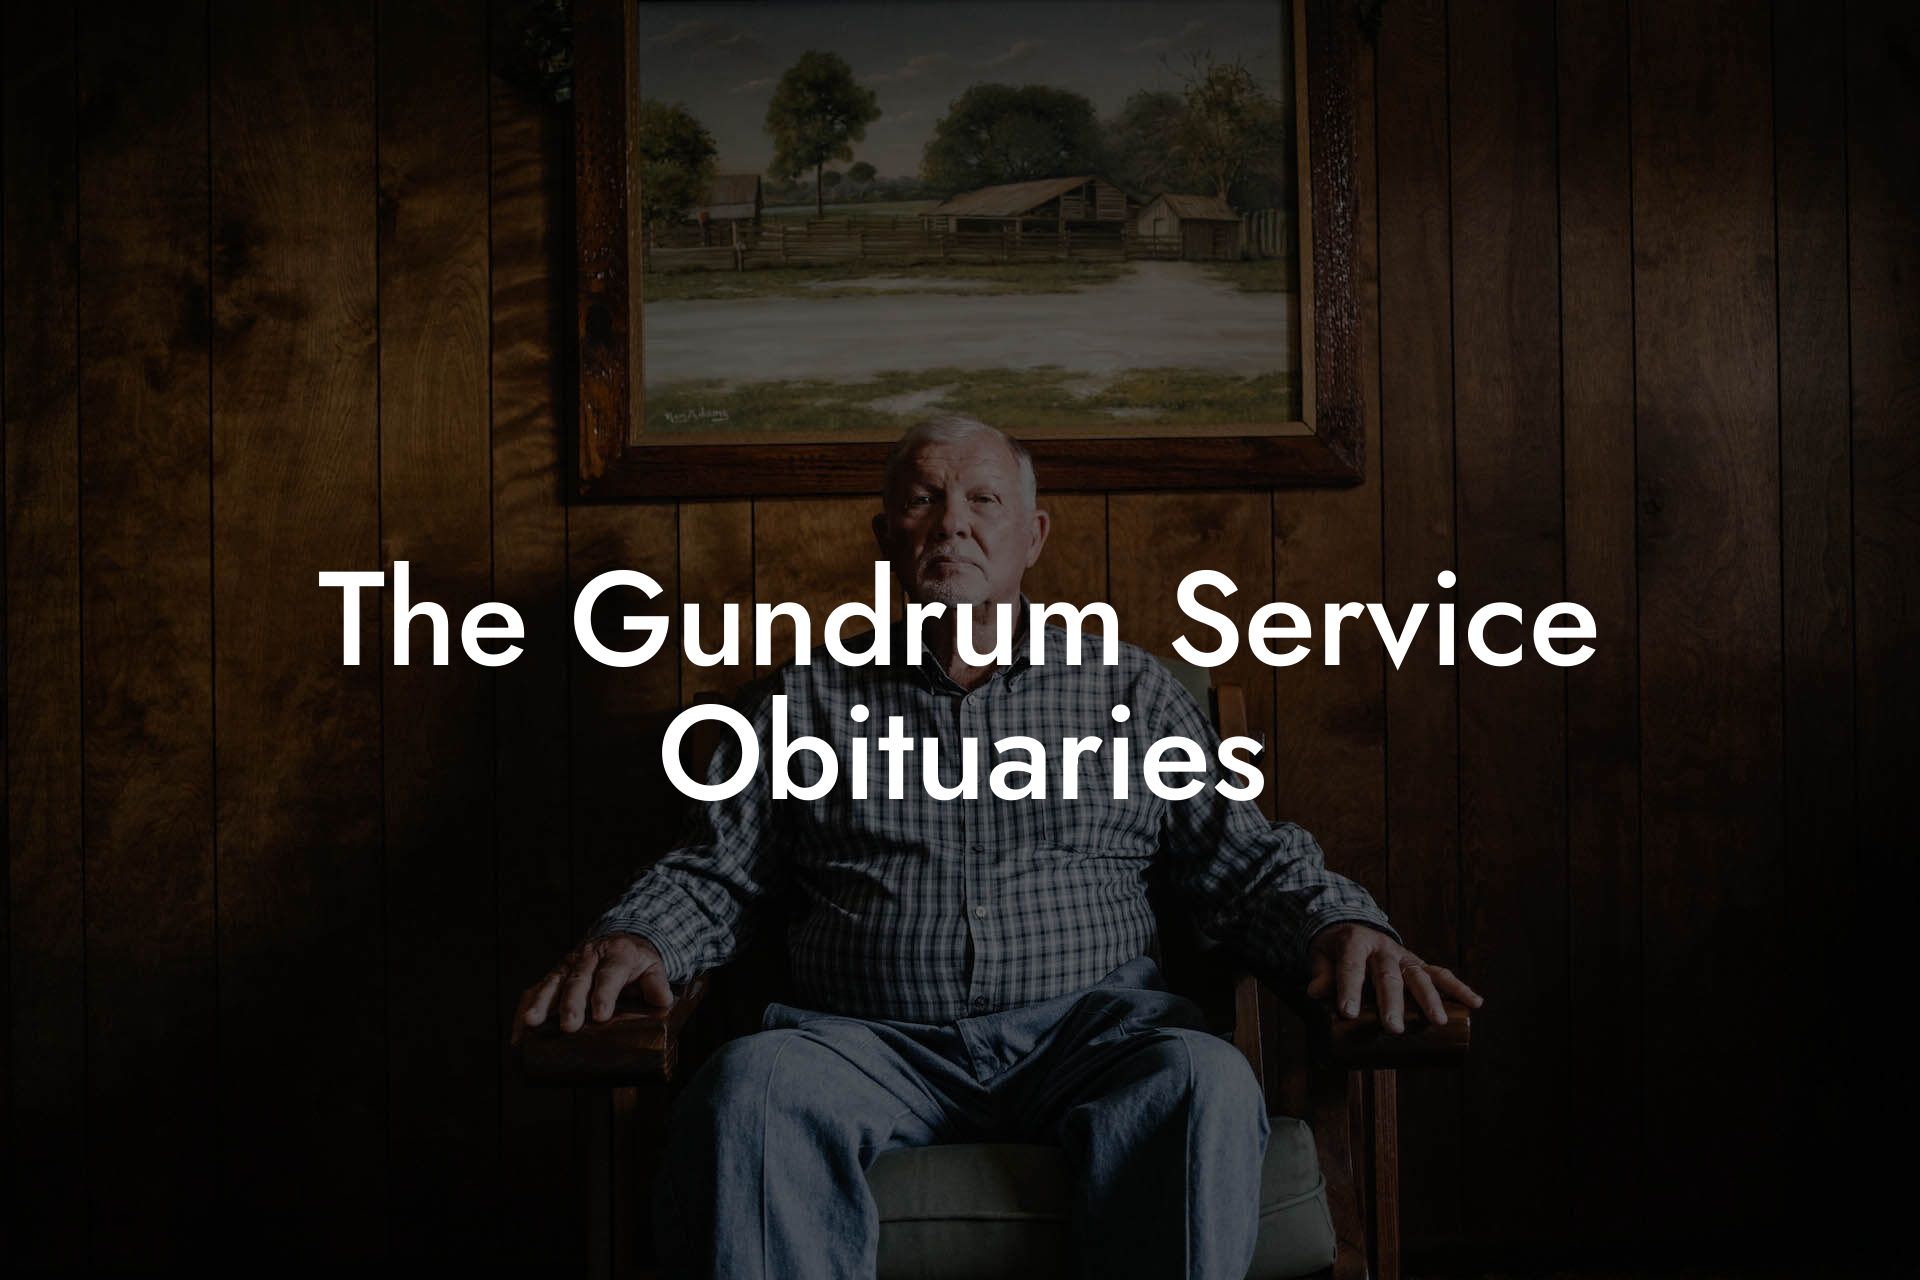 The Gundrum Service Obituaries